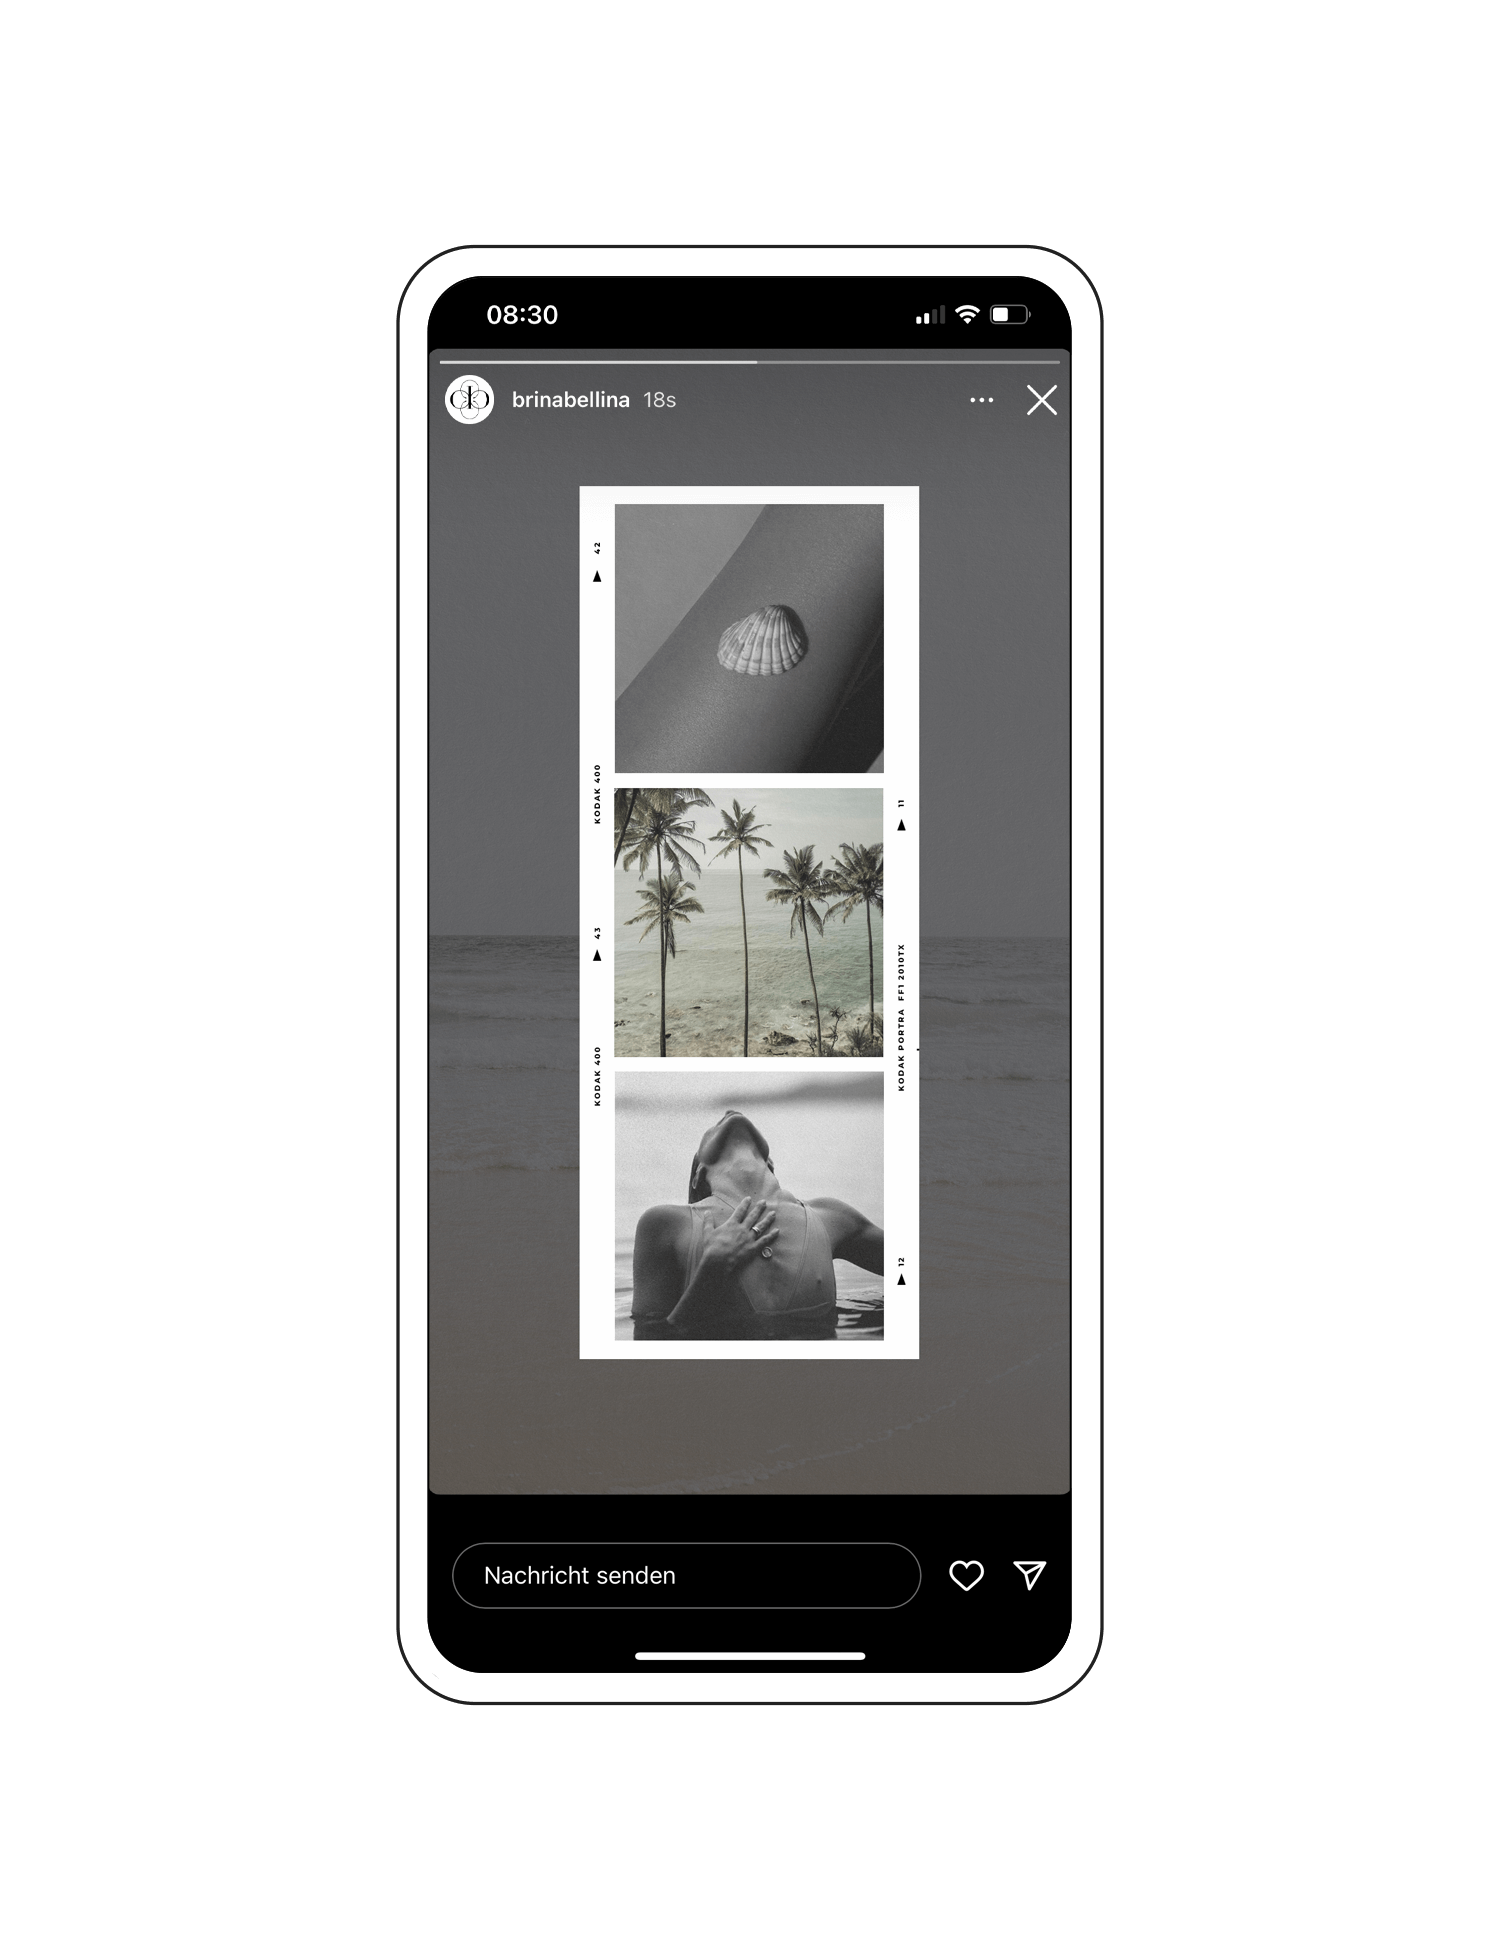 Gratis Instagram Story Template im Kodak Portra 400 Stil aus der 'The Seaside' Instagram Story Sticker Kollektion.